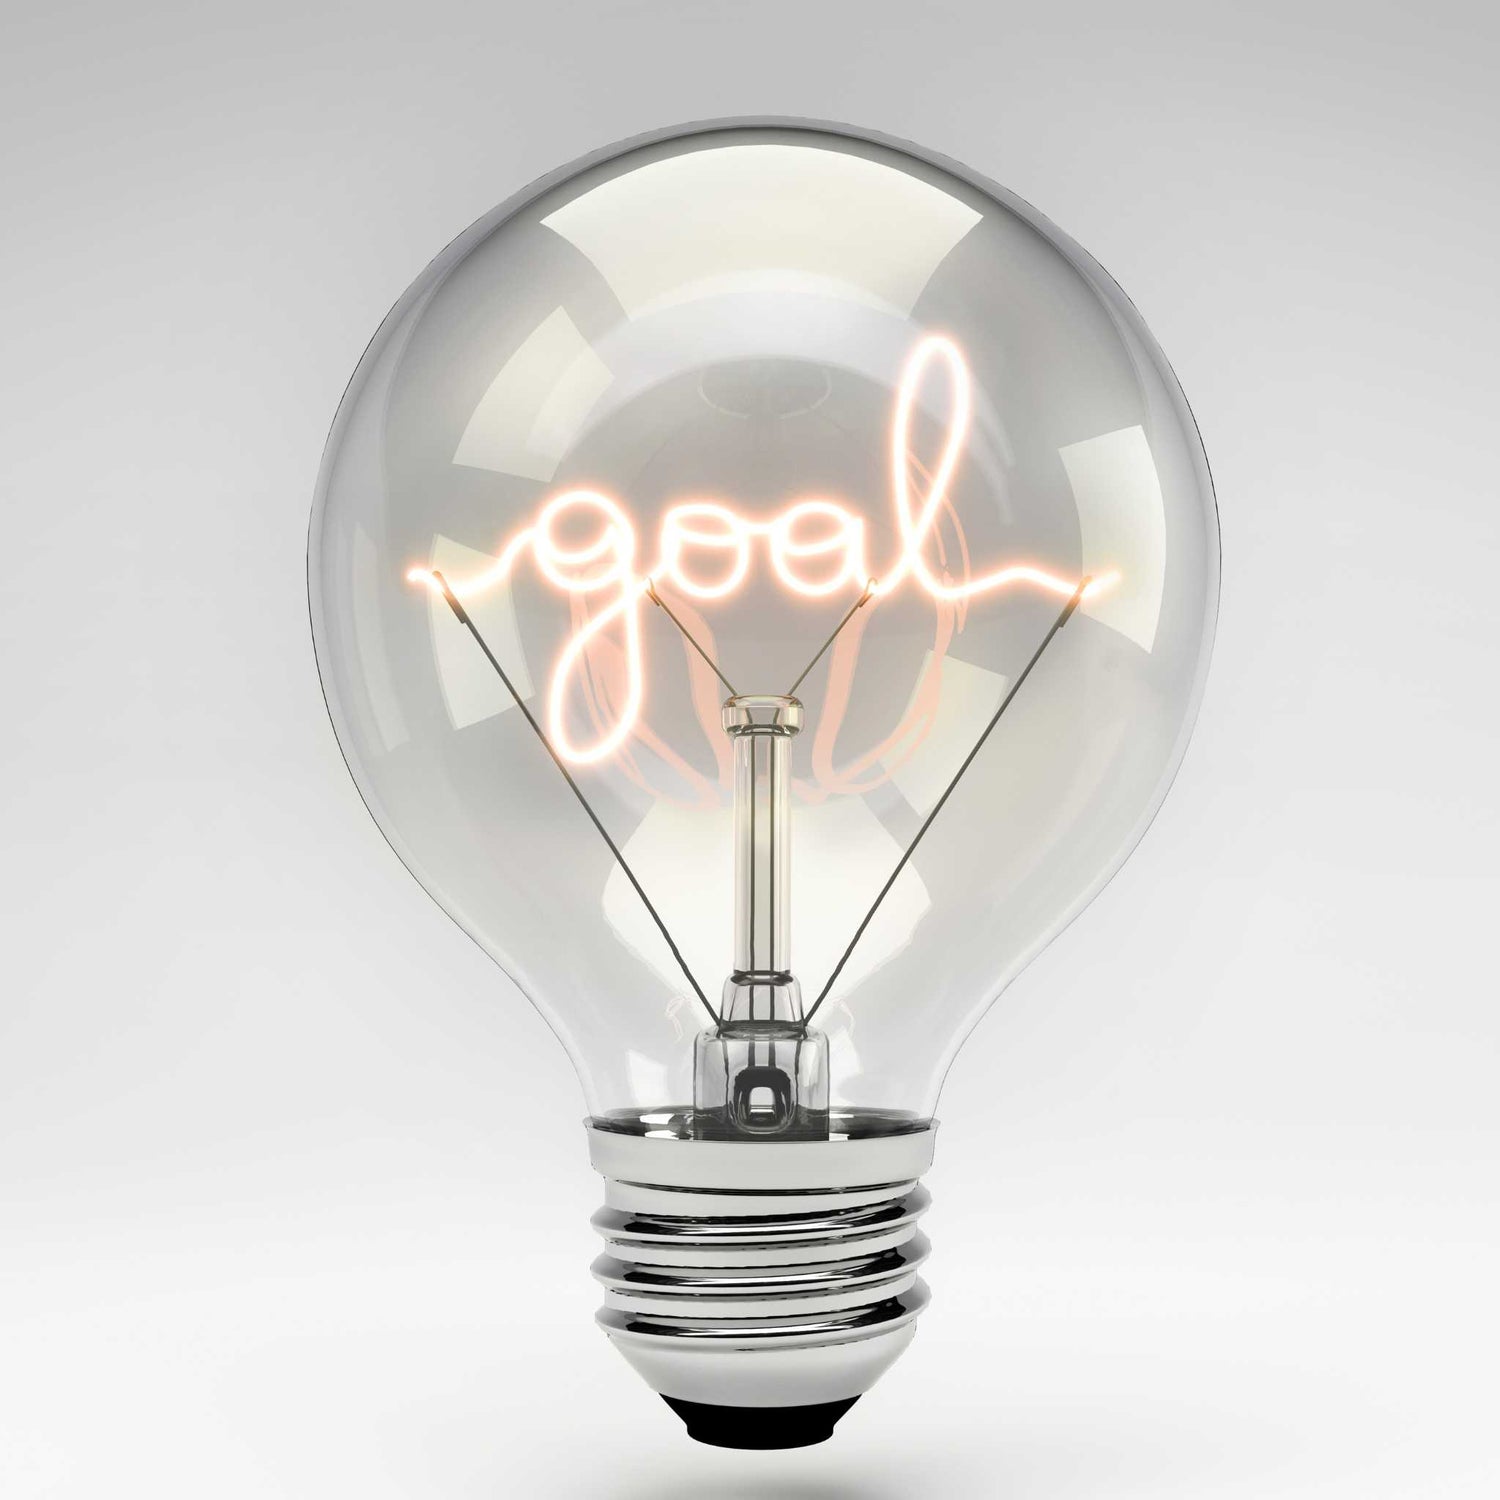 Lightbulb with word "goal" in the center